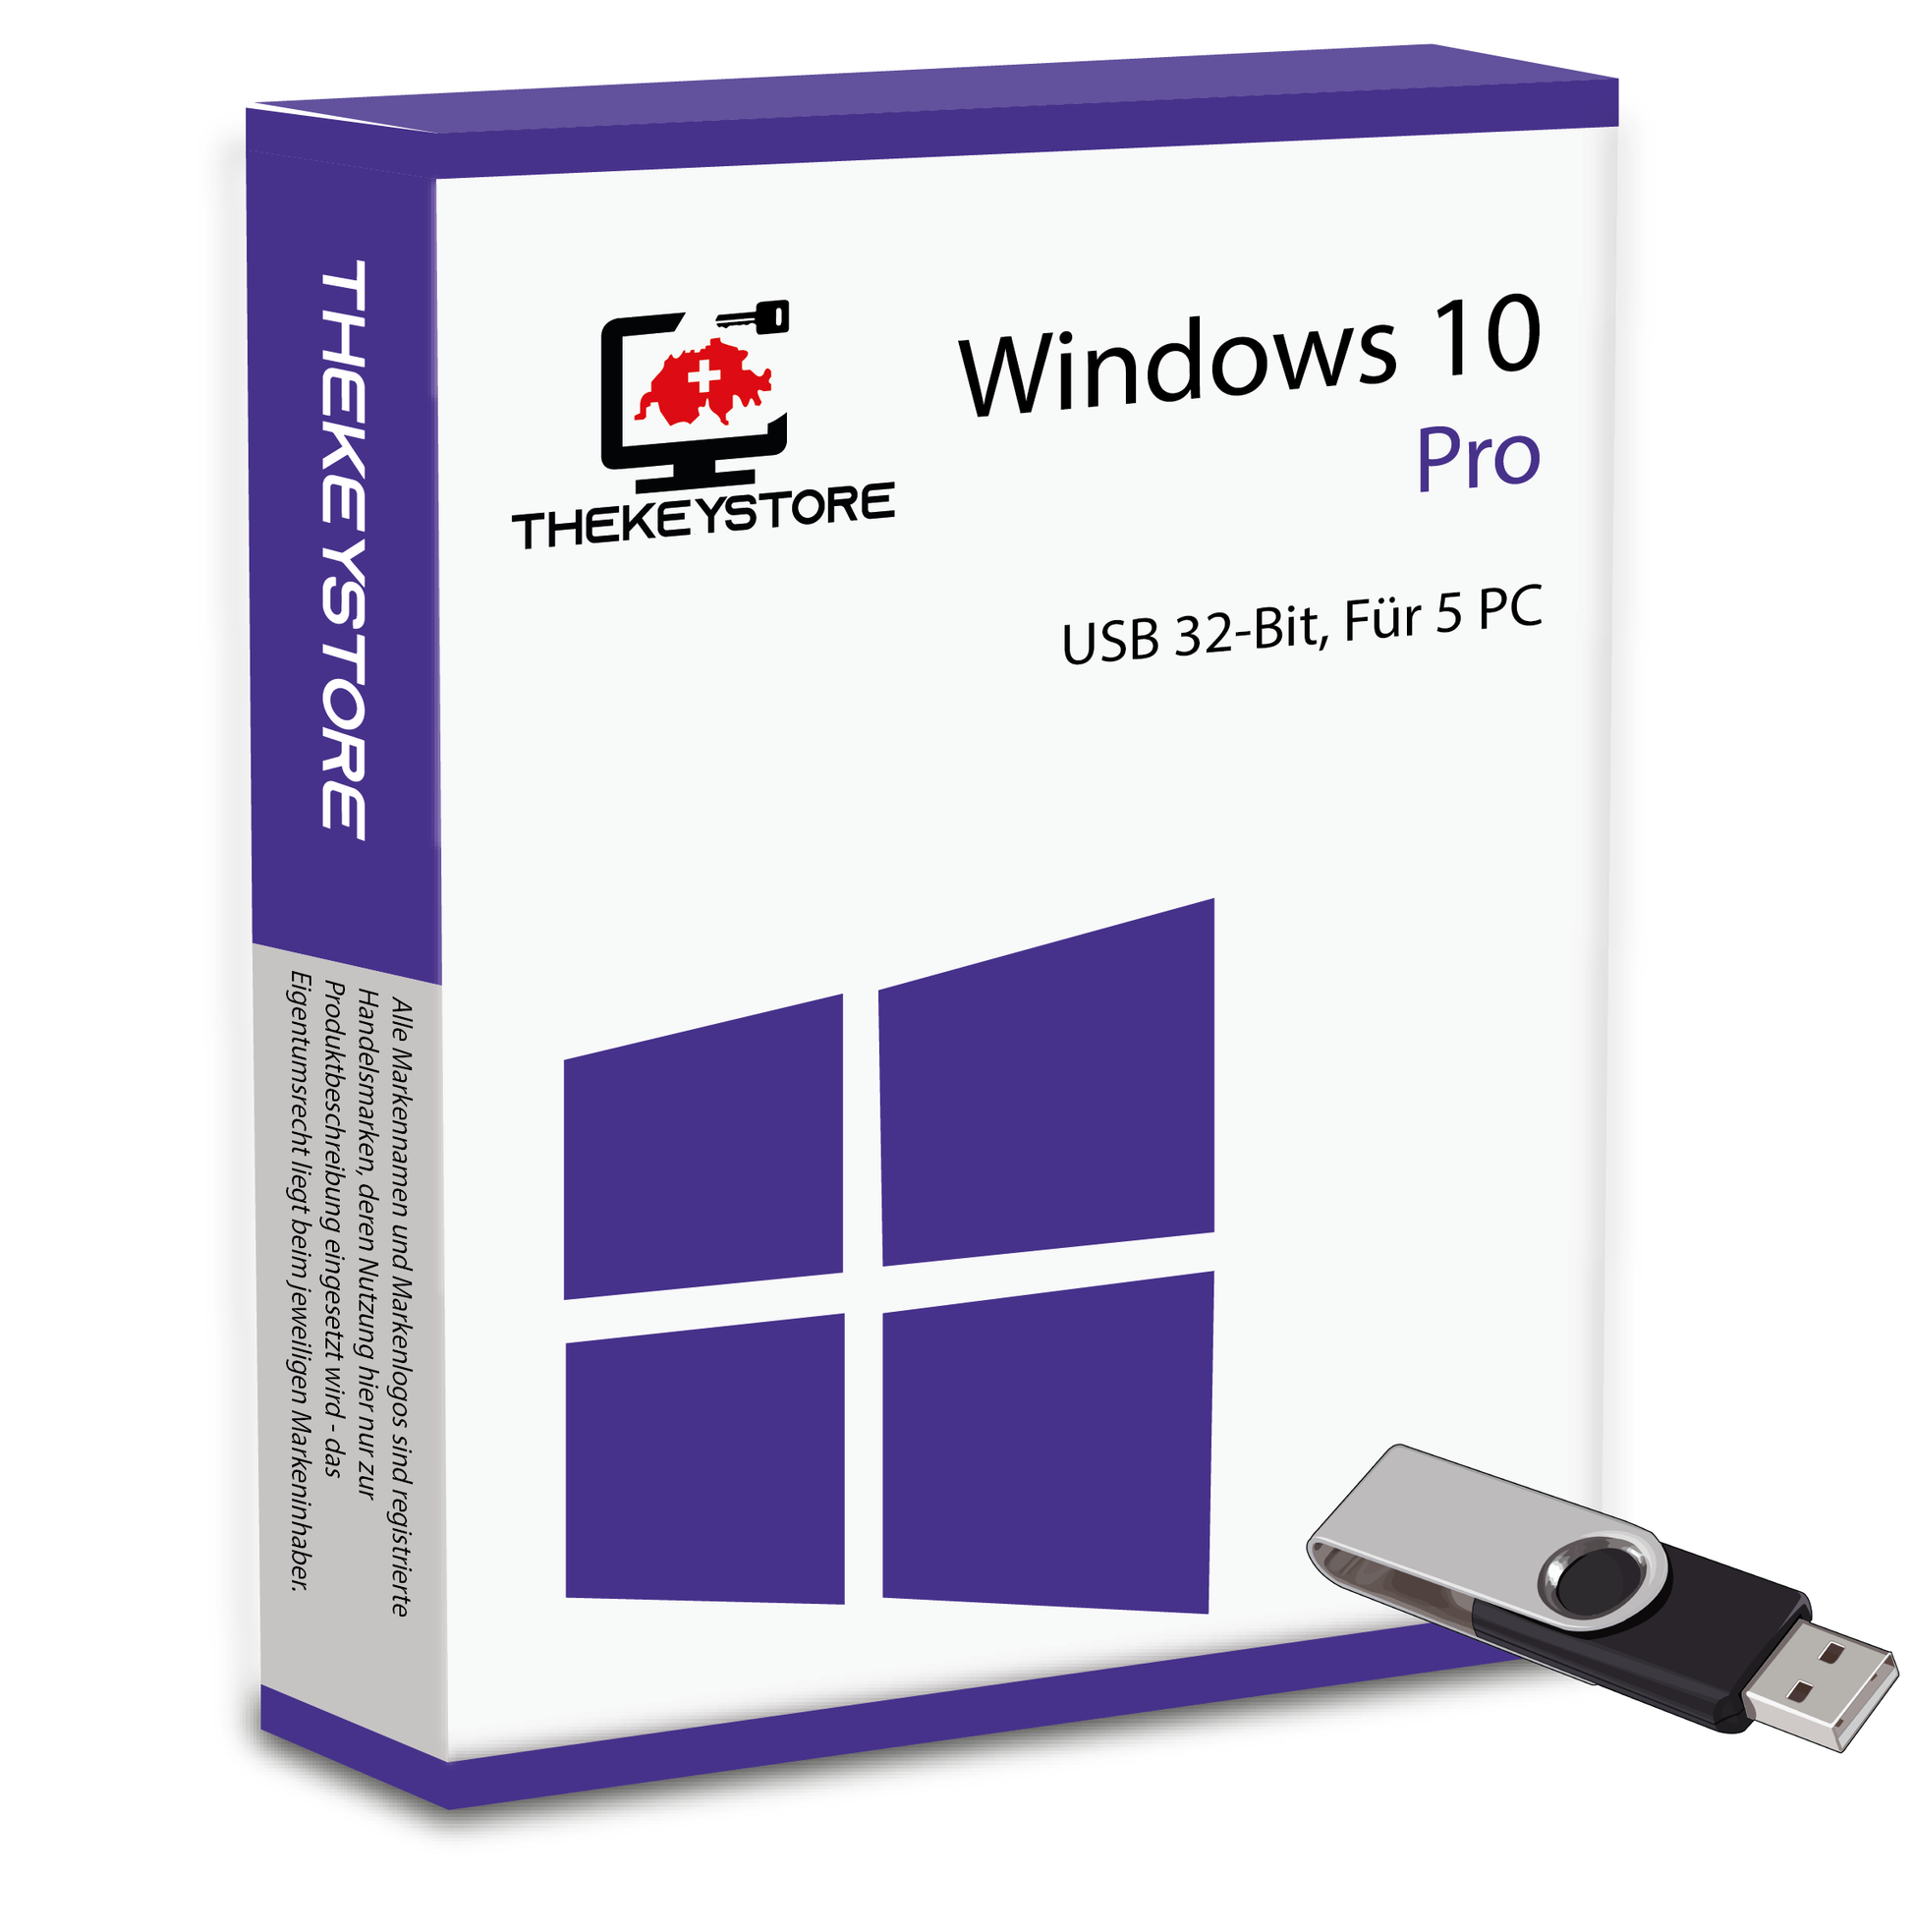 Microsoft Windows 10 Pro - Für 5 PC - TheKeyStore Schweiz